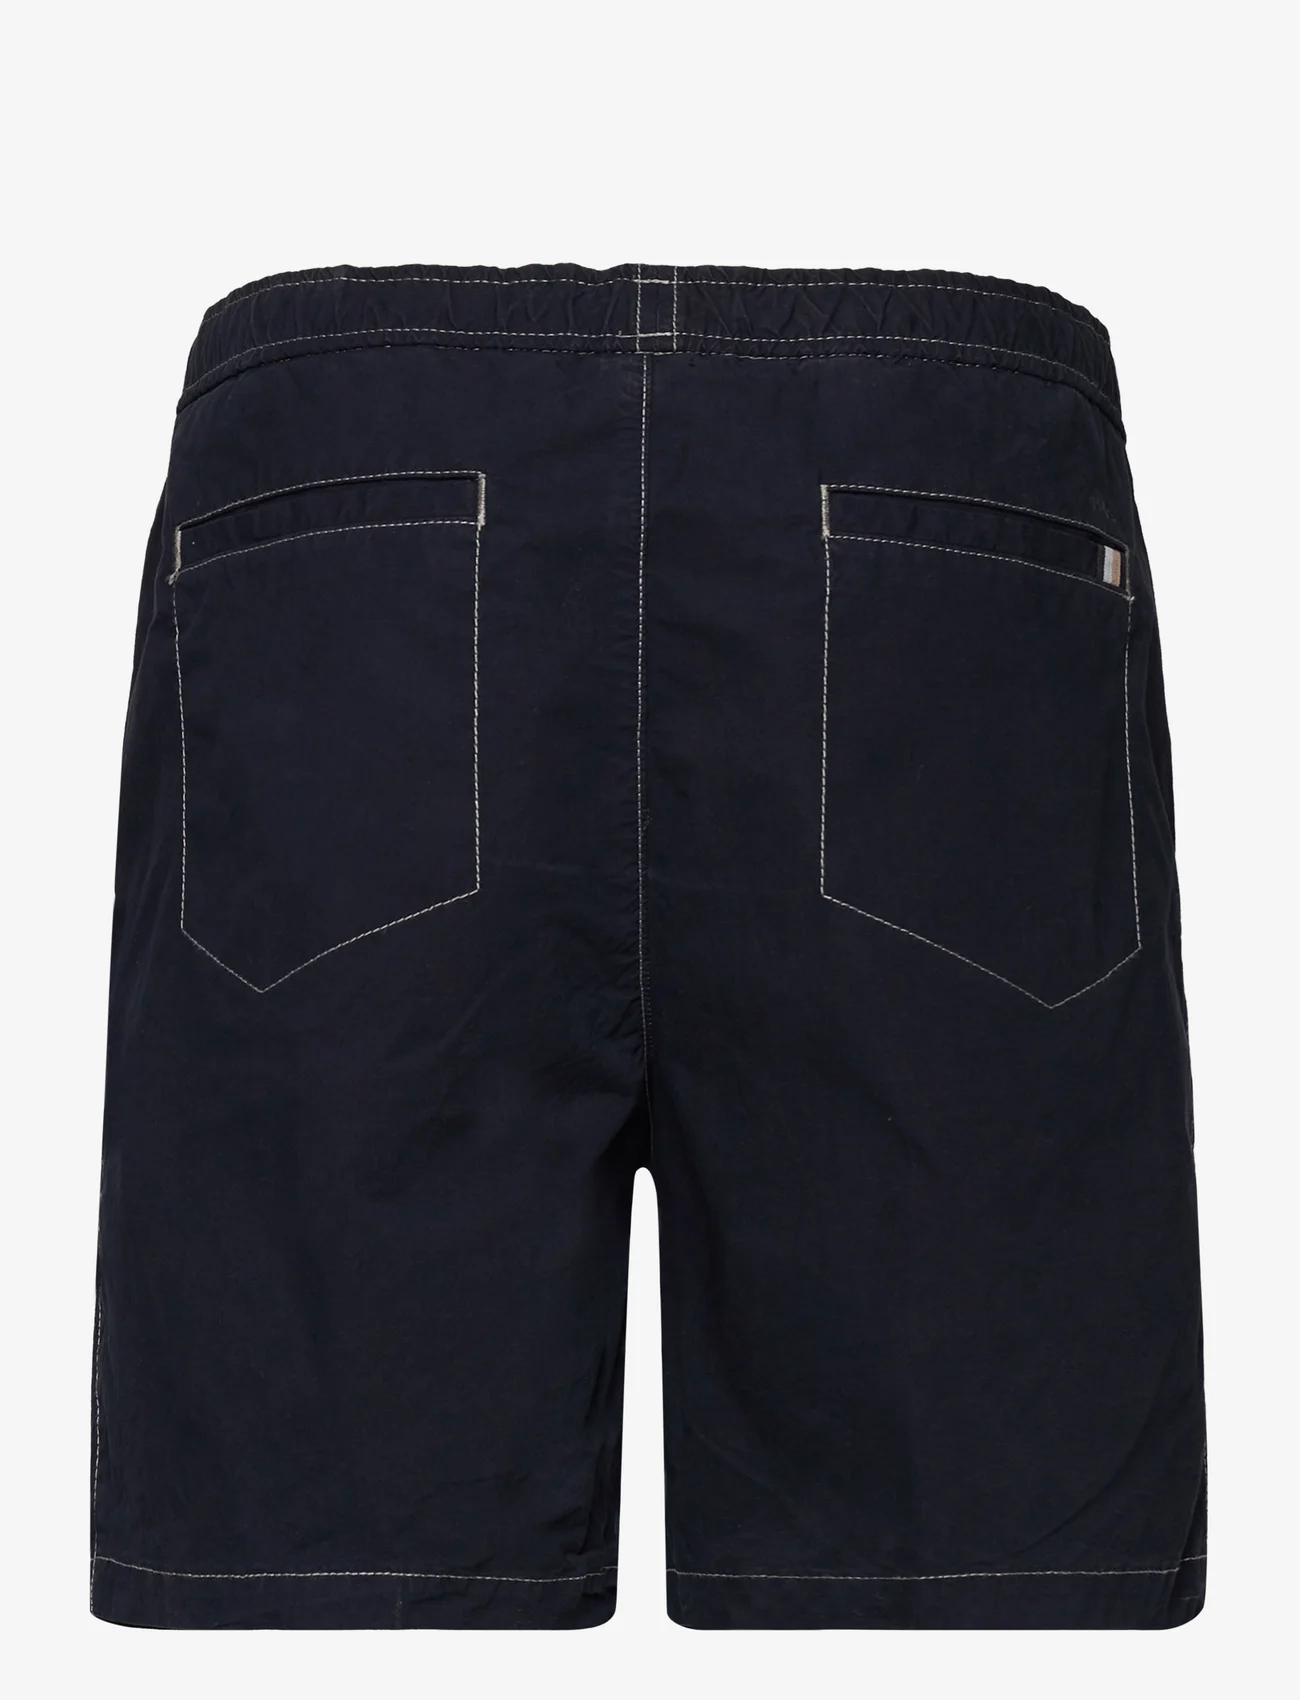 BOSS - Karlos-DS-Shorts - chino shorts - dark blue - 1